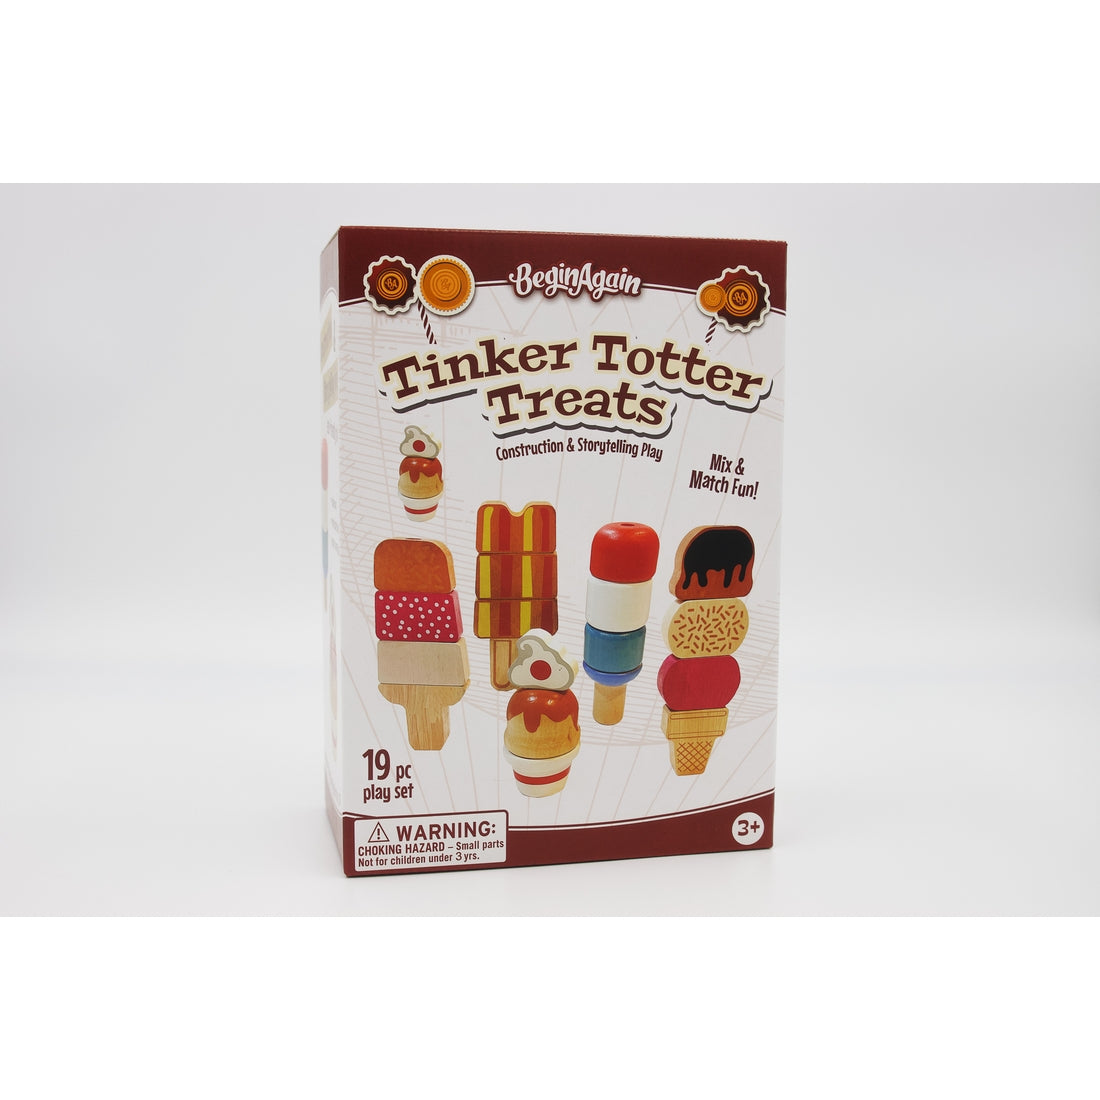 Tinker Totter Treats - 19 Piece Play Set